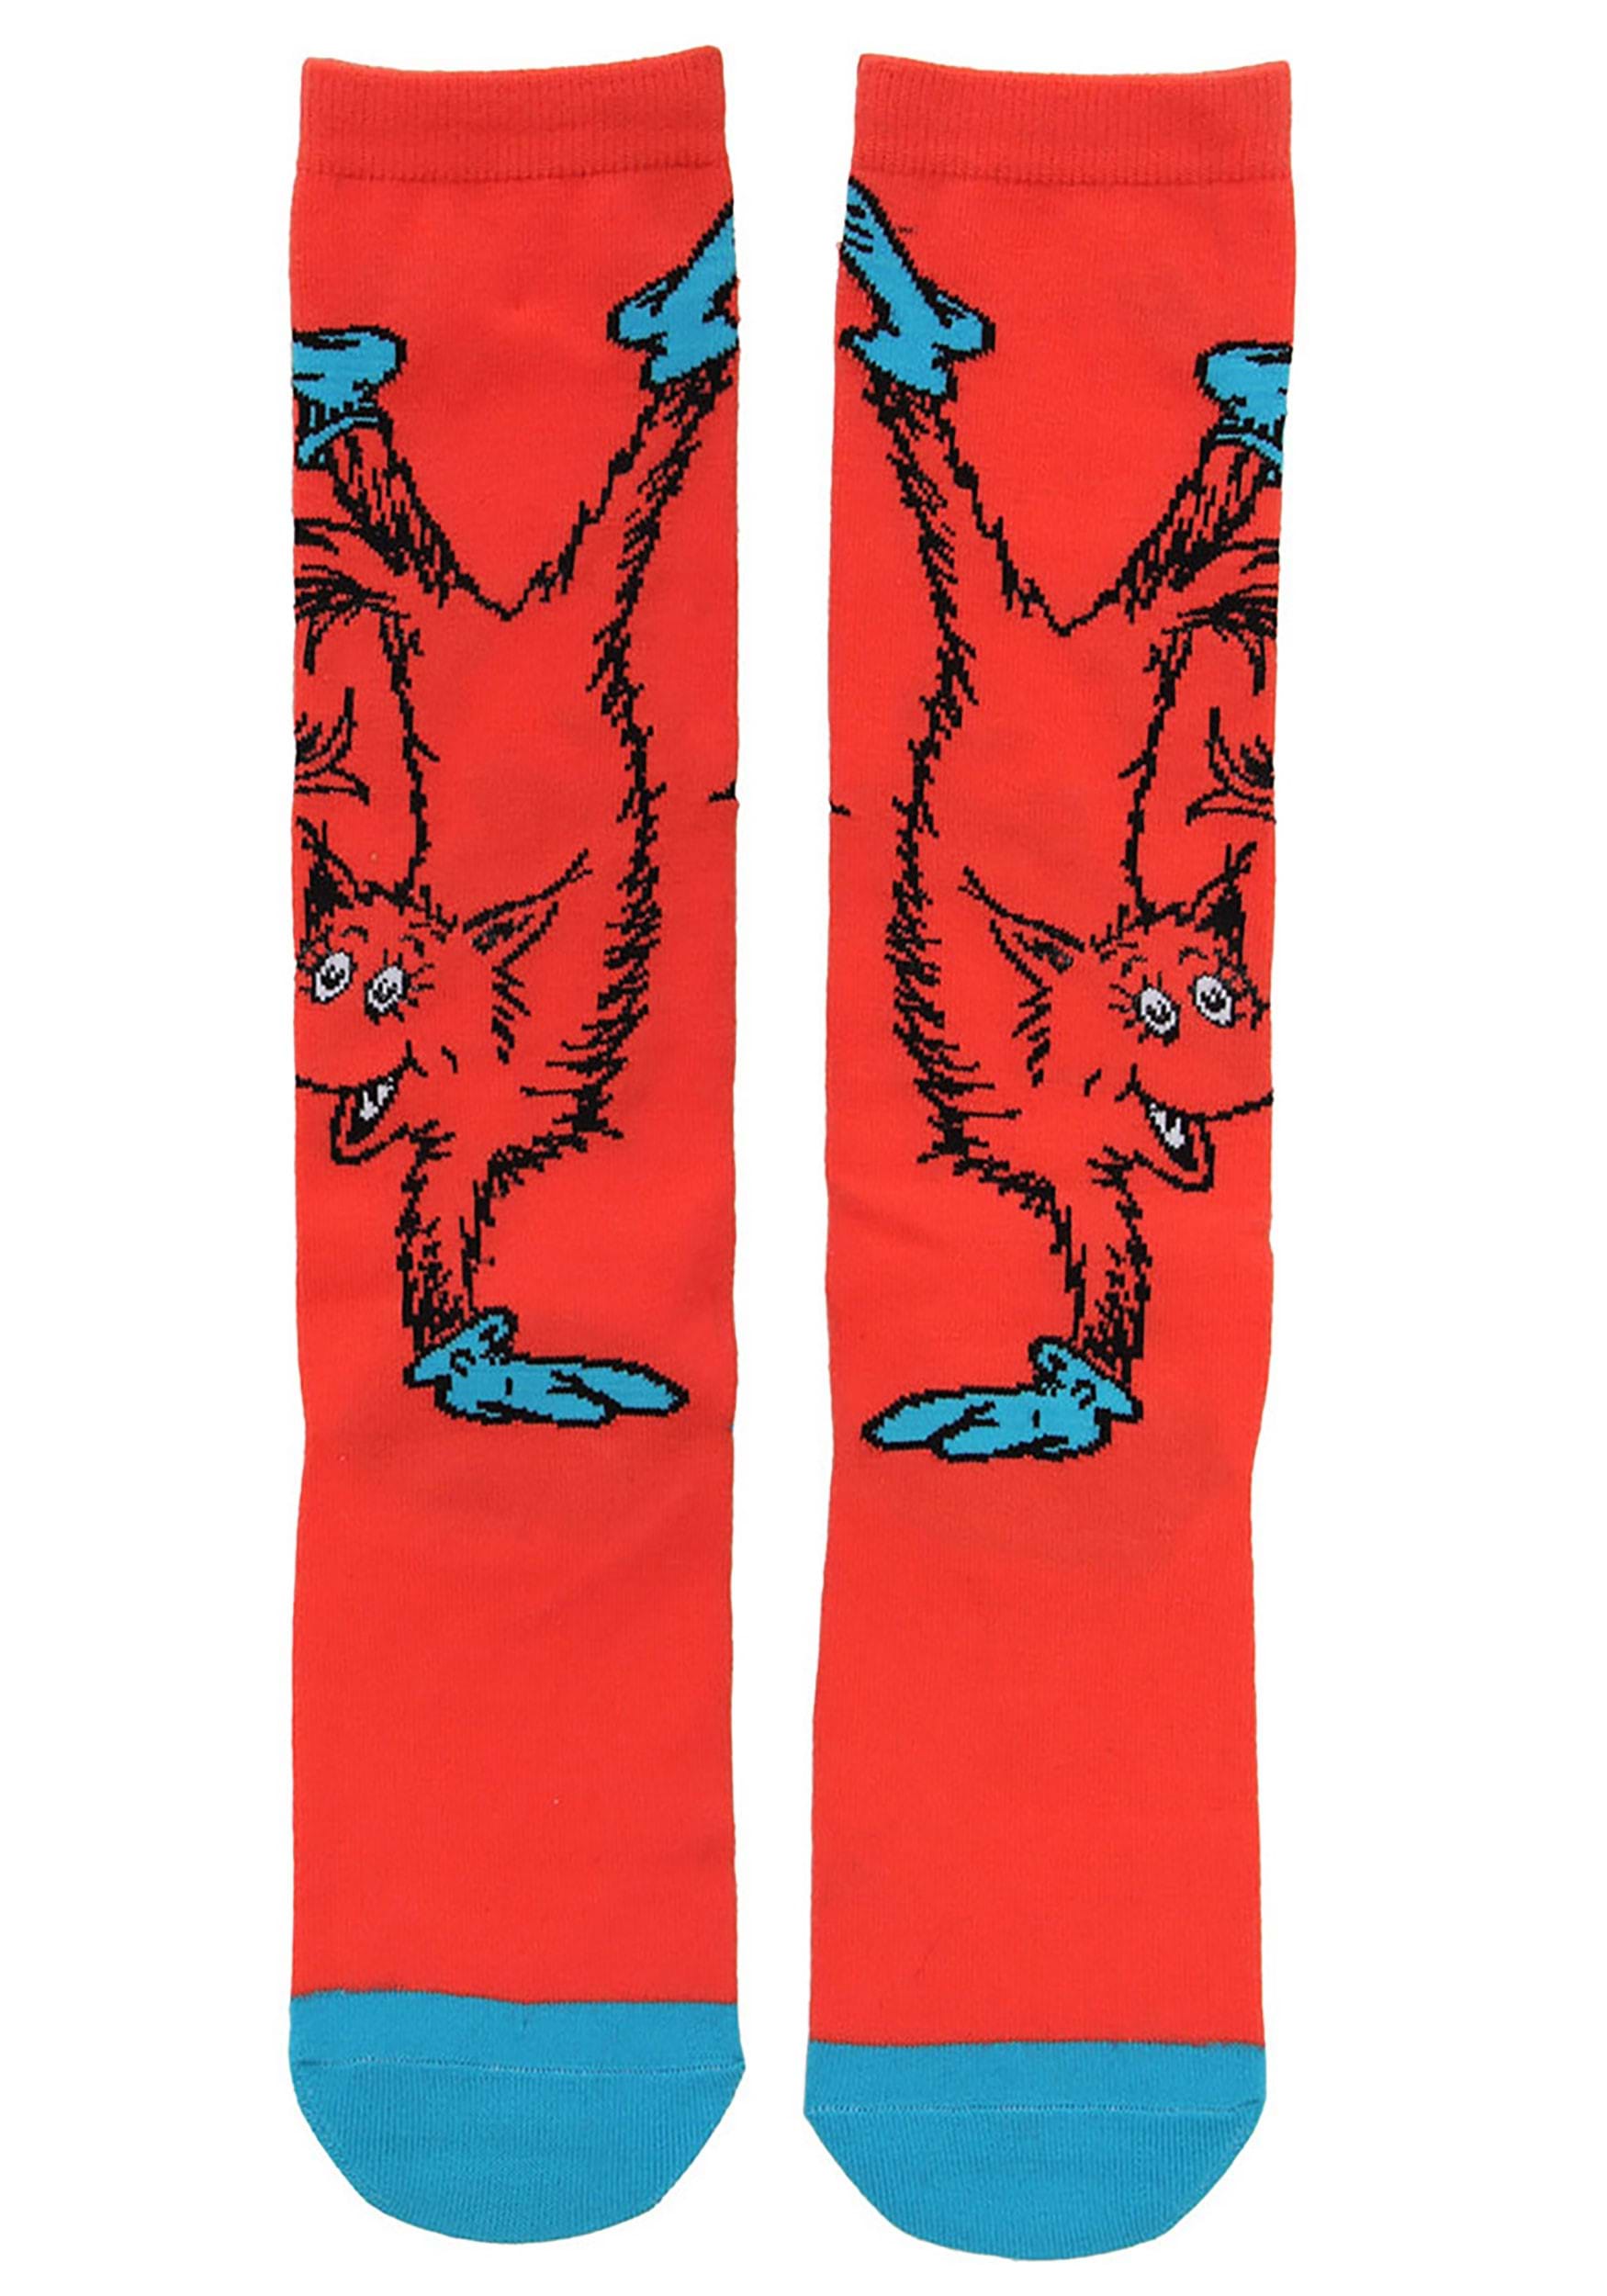 Knee High Fox In Socks Costume Socks